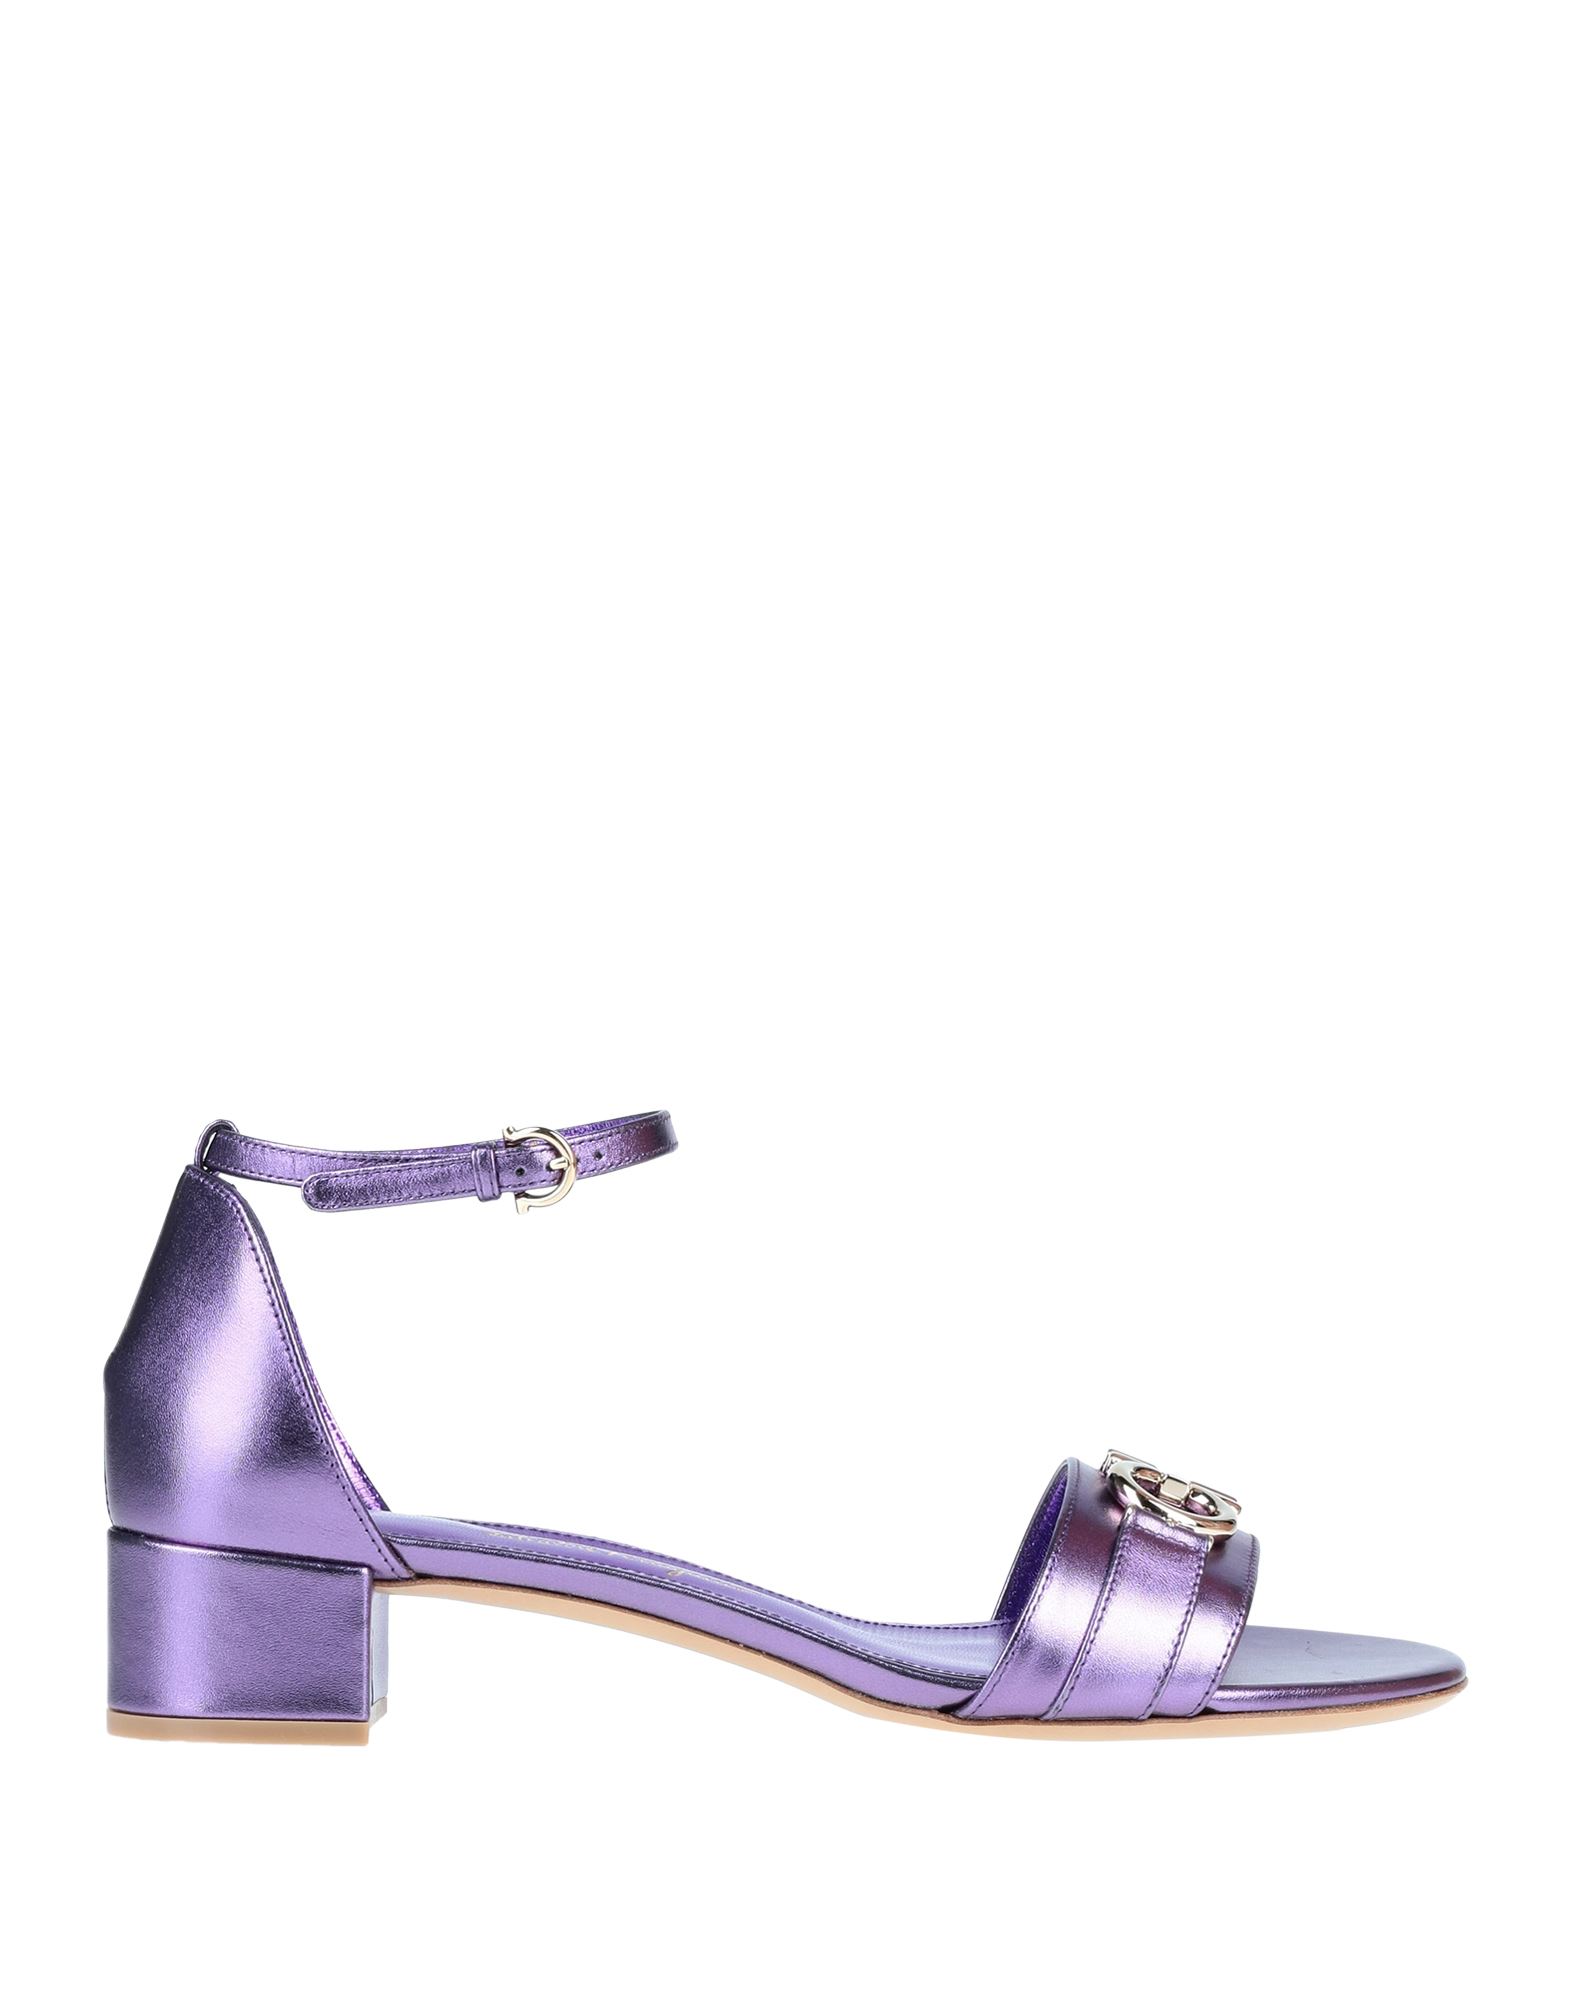 Ferragamo Sandals In Purple